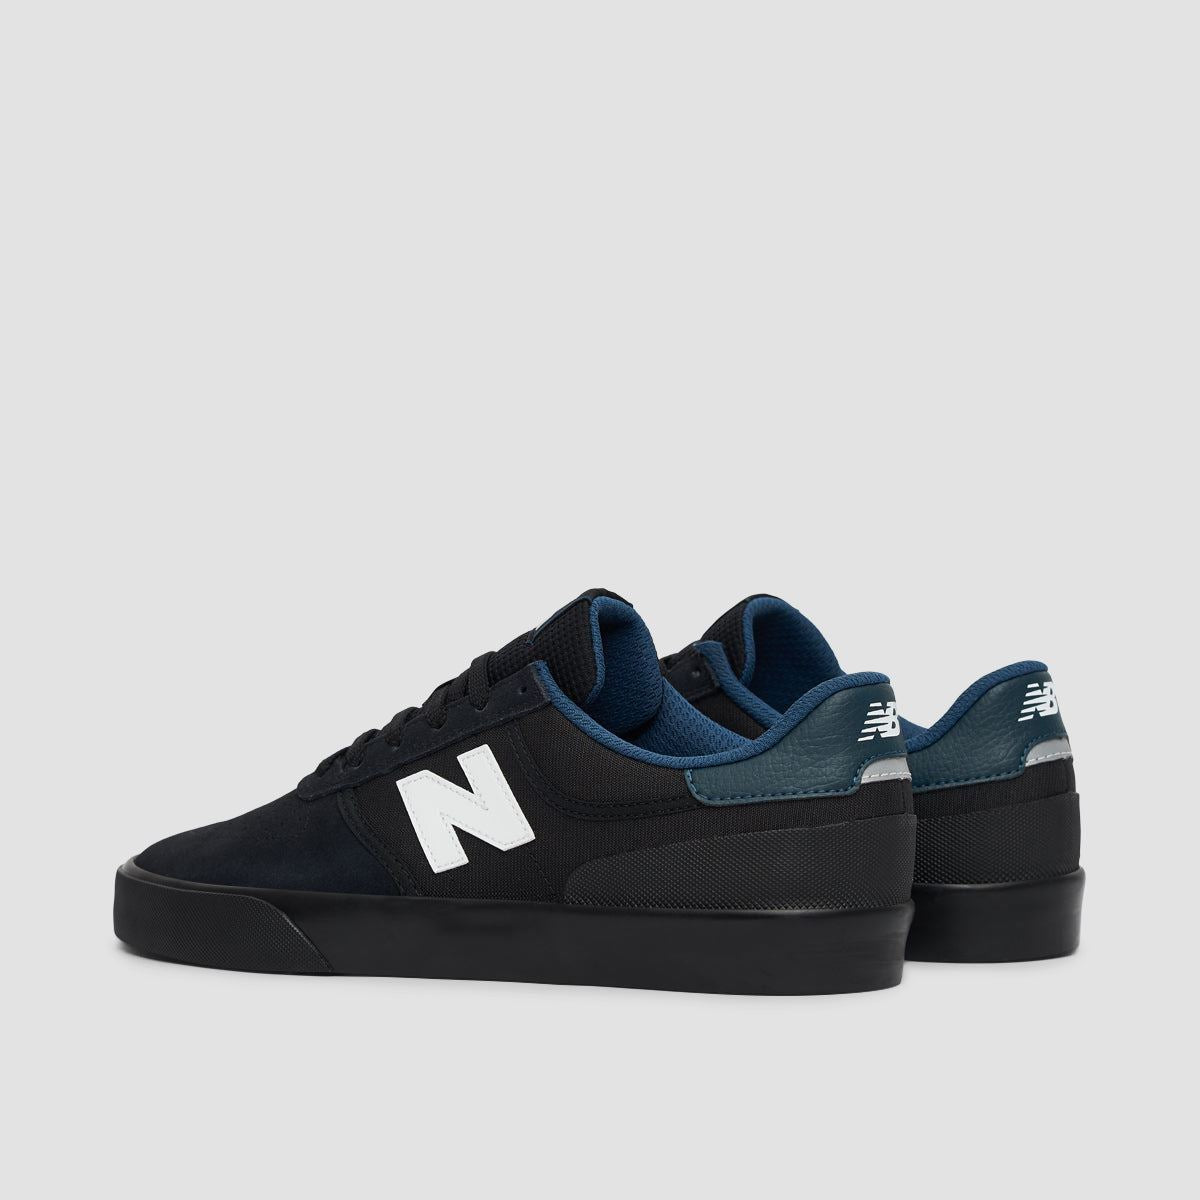 New Balance Numeric 272 V1 Shoes - Black/White